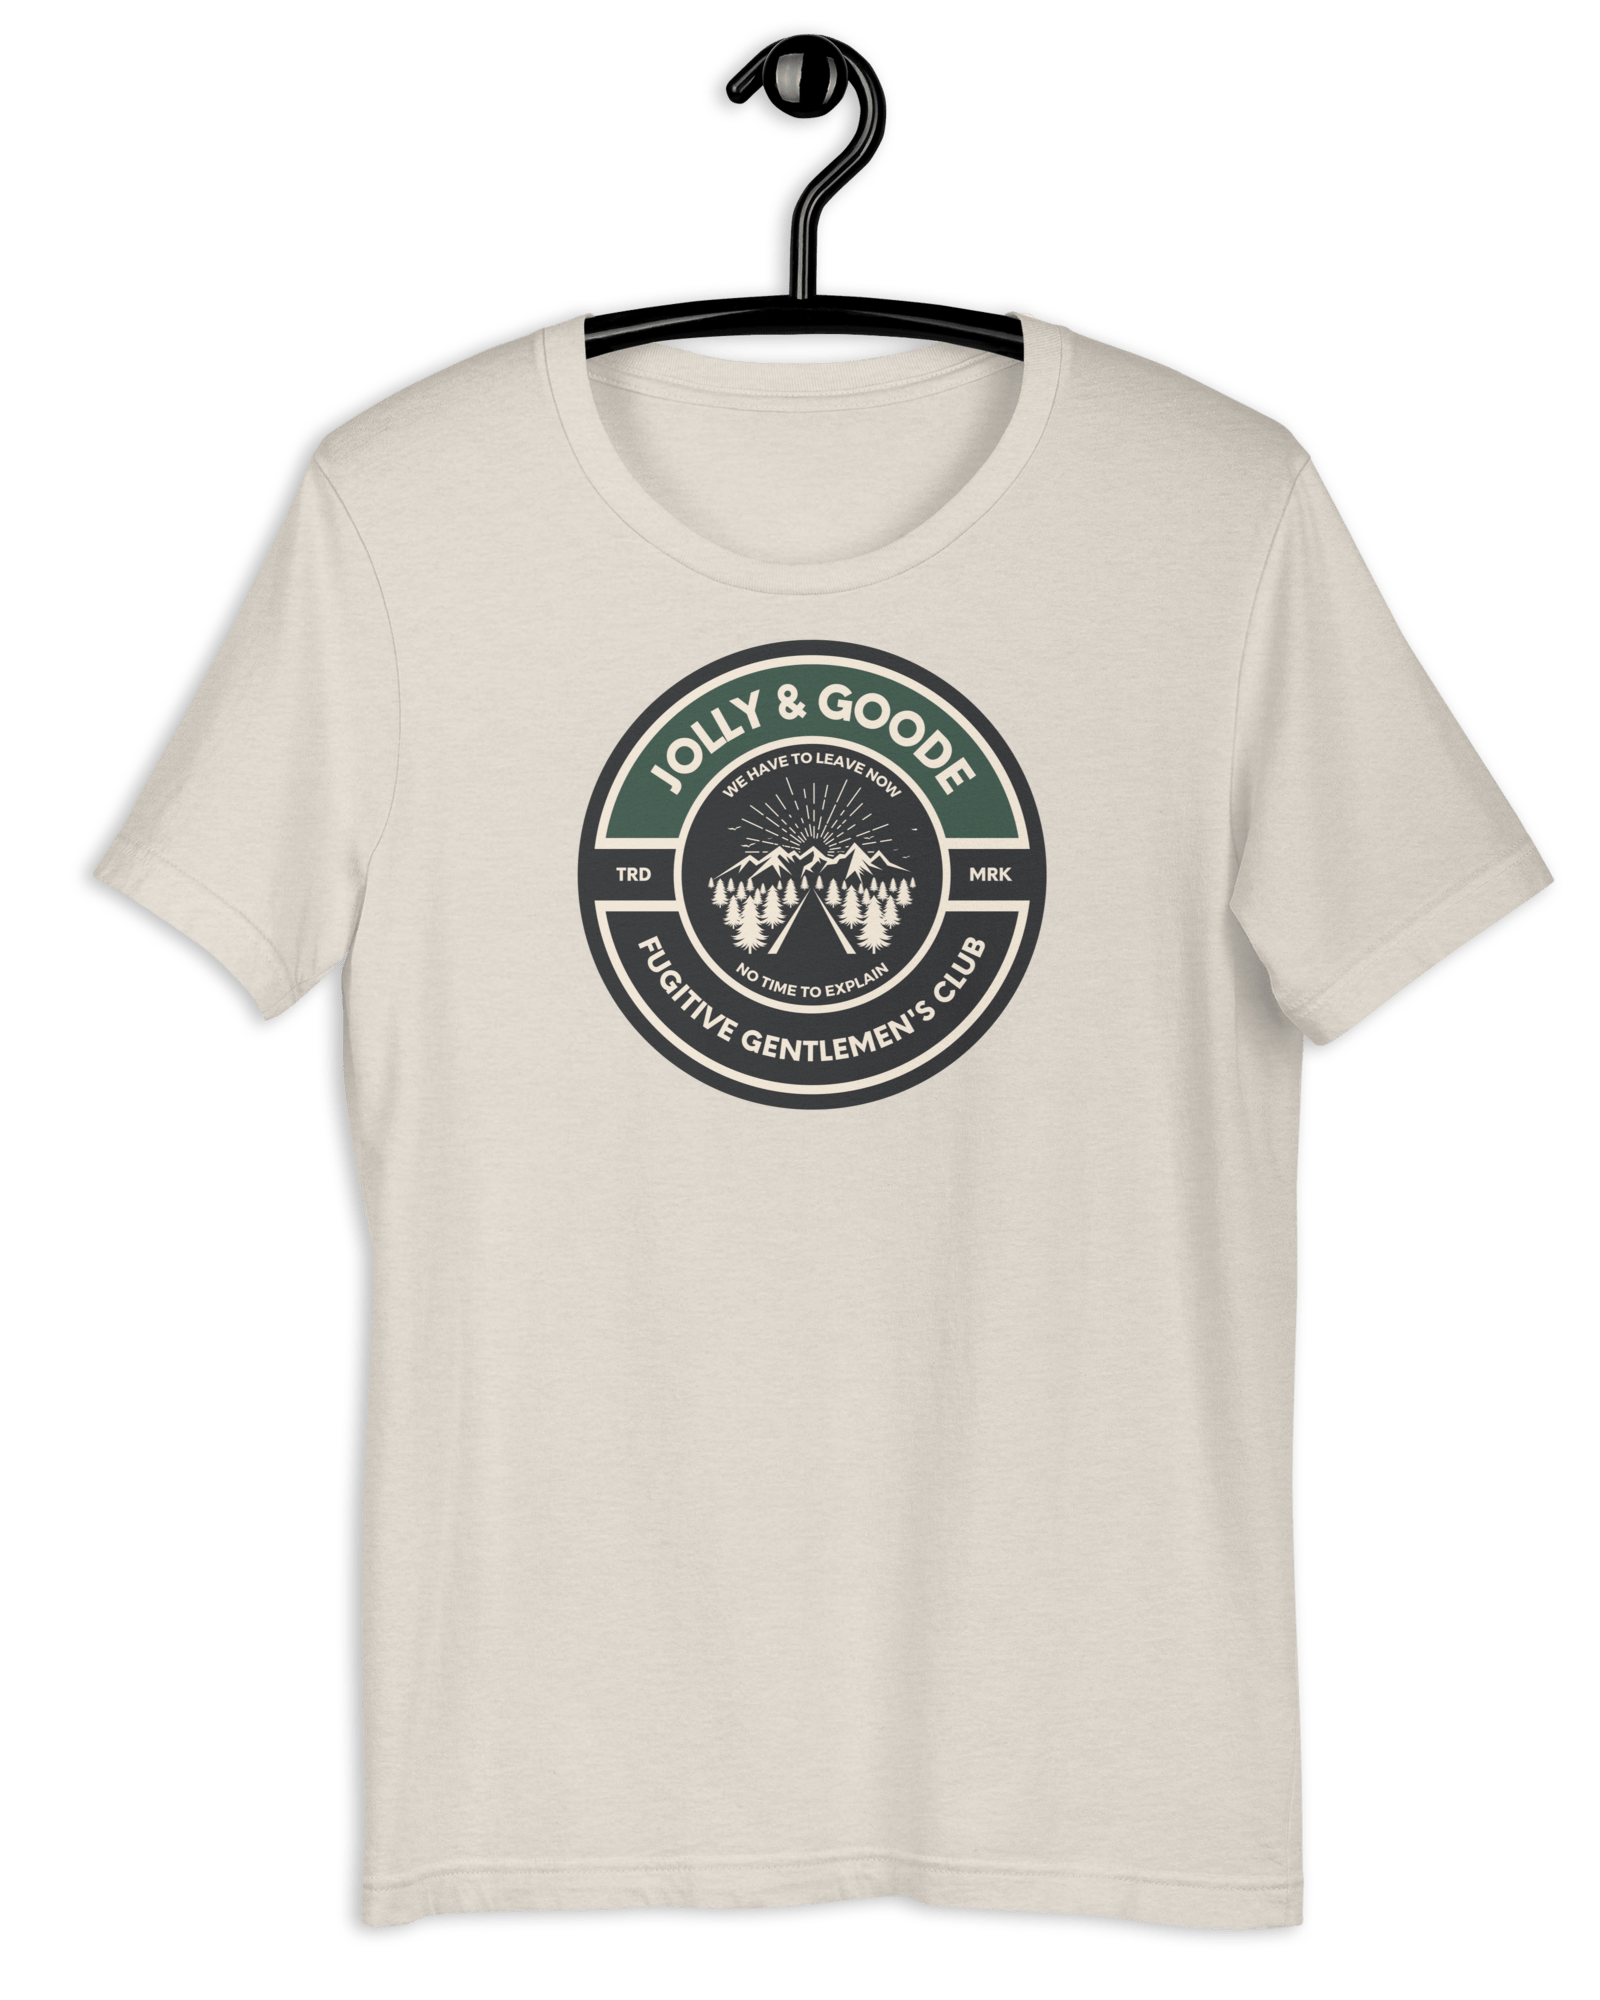 Fugitive Gentlemen's Club T-shirt Heather Dust / S Shirts & Tops Jolly & Goode